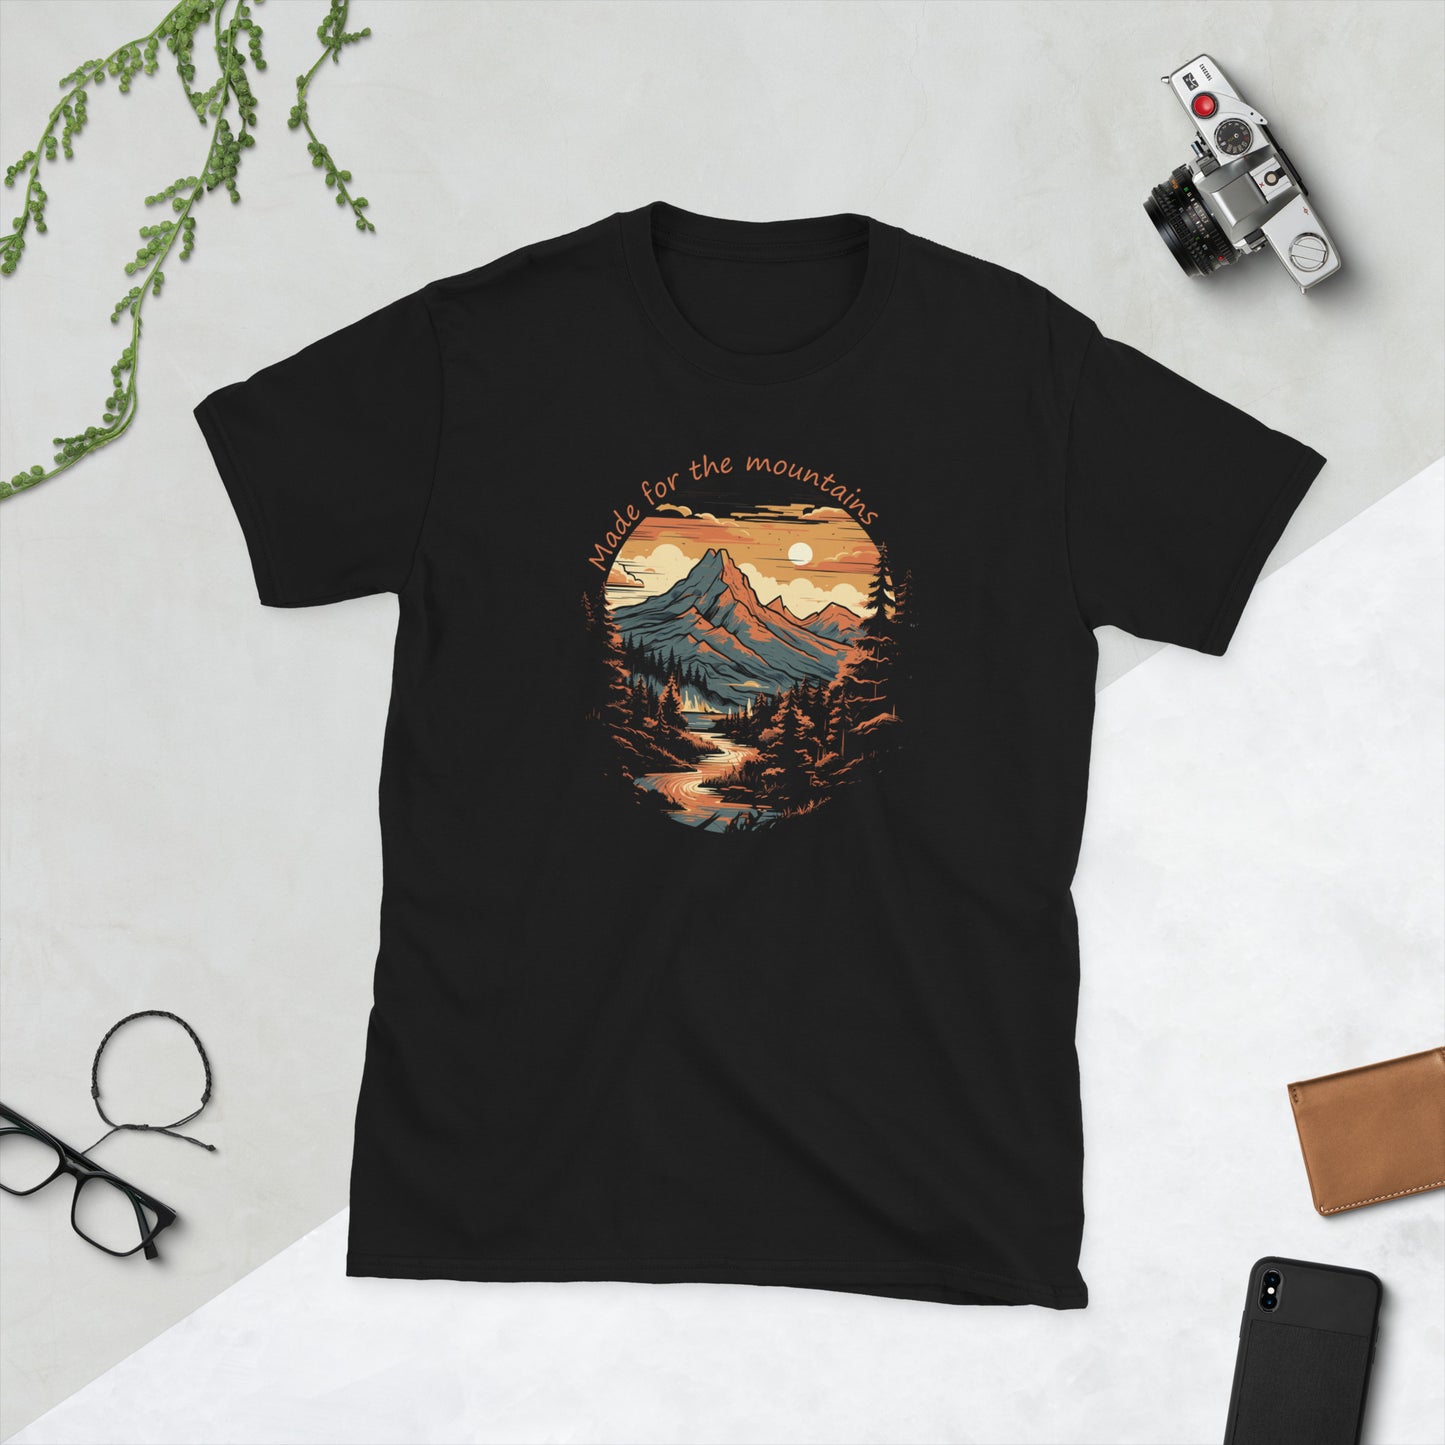 Unisex marškinėliai: "Made for the mountains" 1